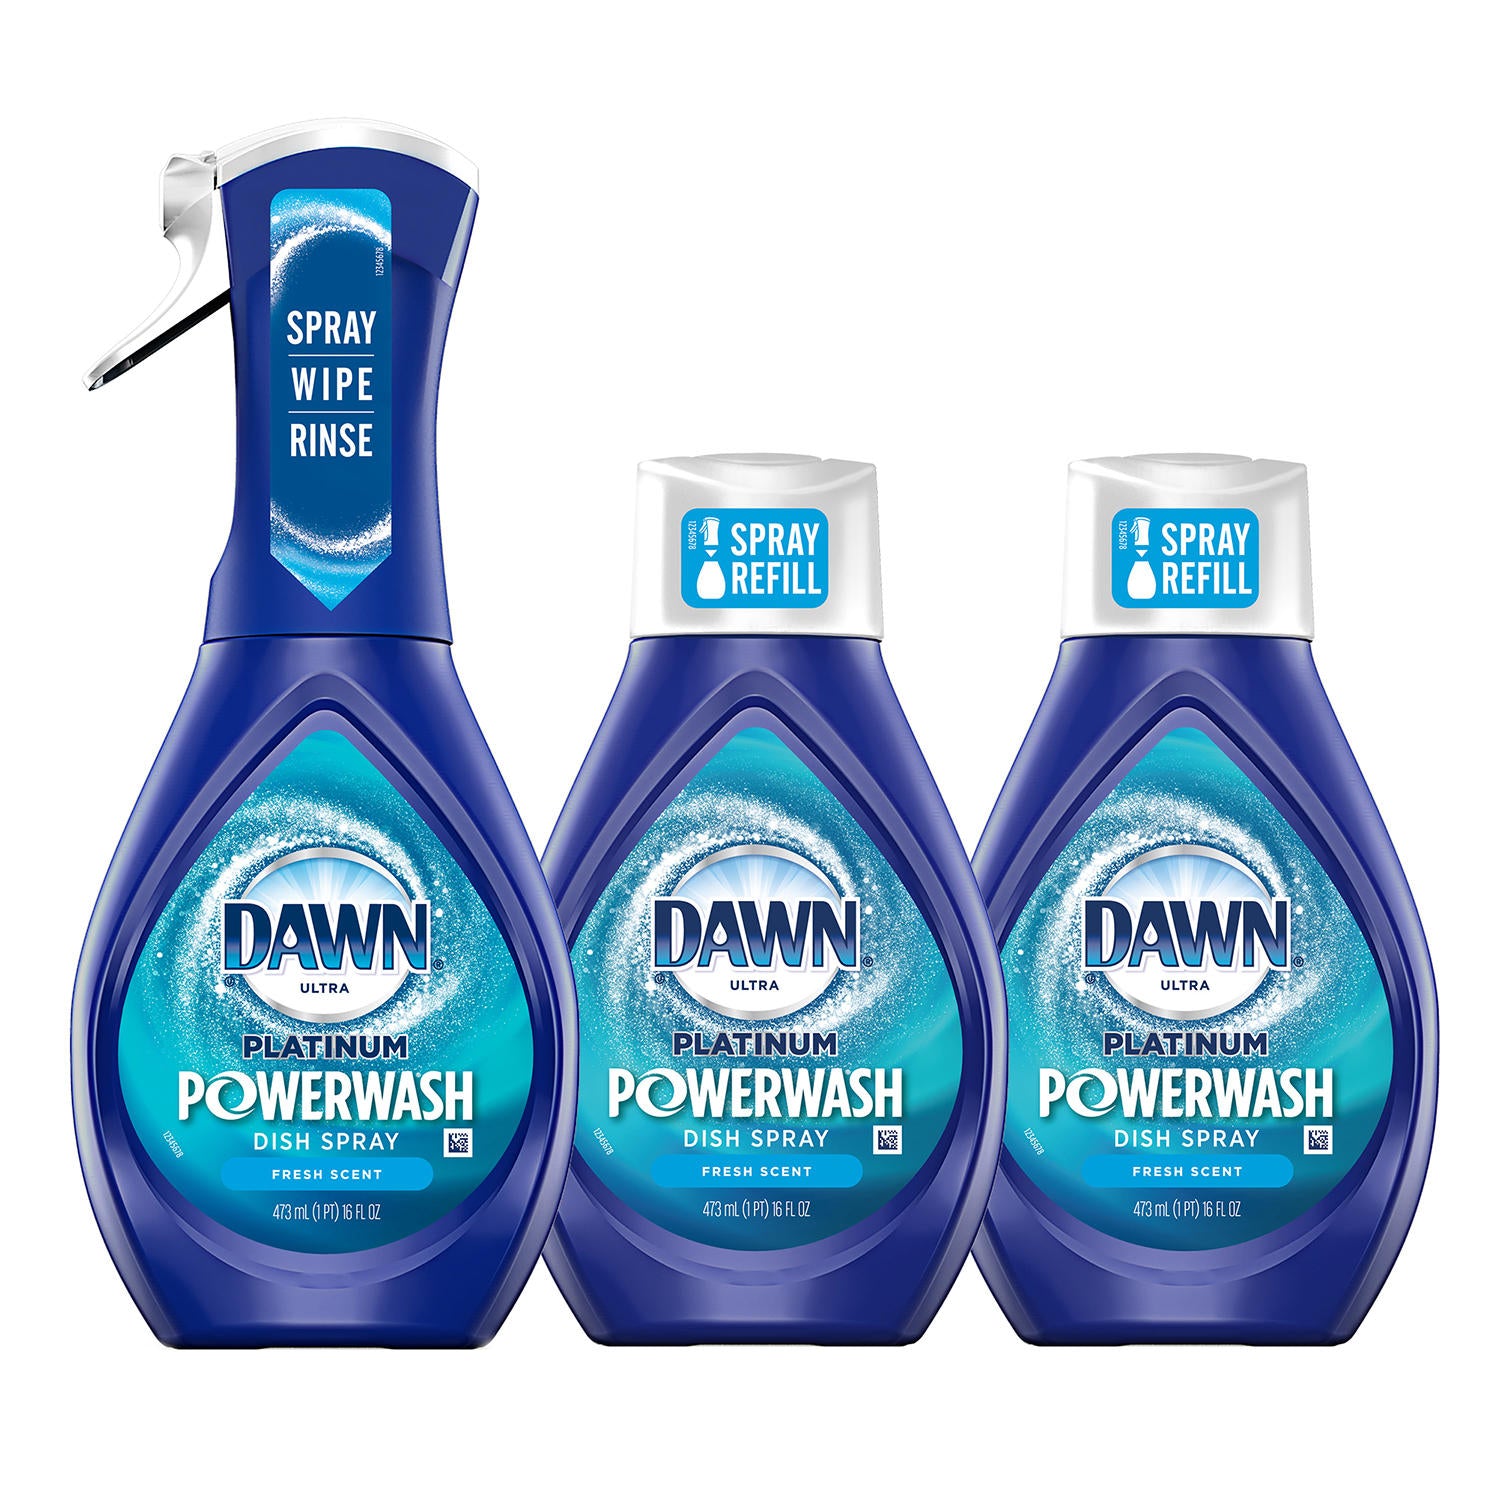 Dawn Platinum Powerwash Dish Soap Spray with Refills Bundle Fresh Scent 1 spray + 2 refills - 3x16oz/1pk